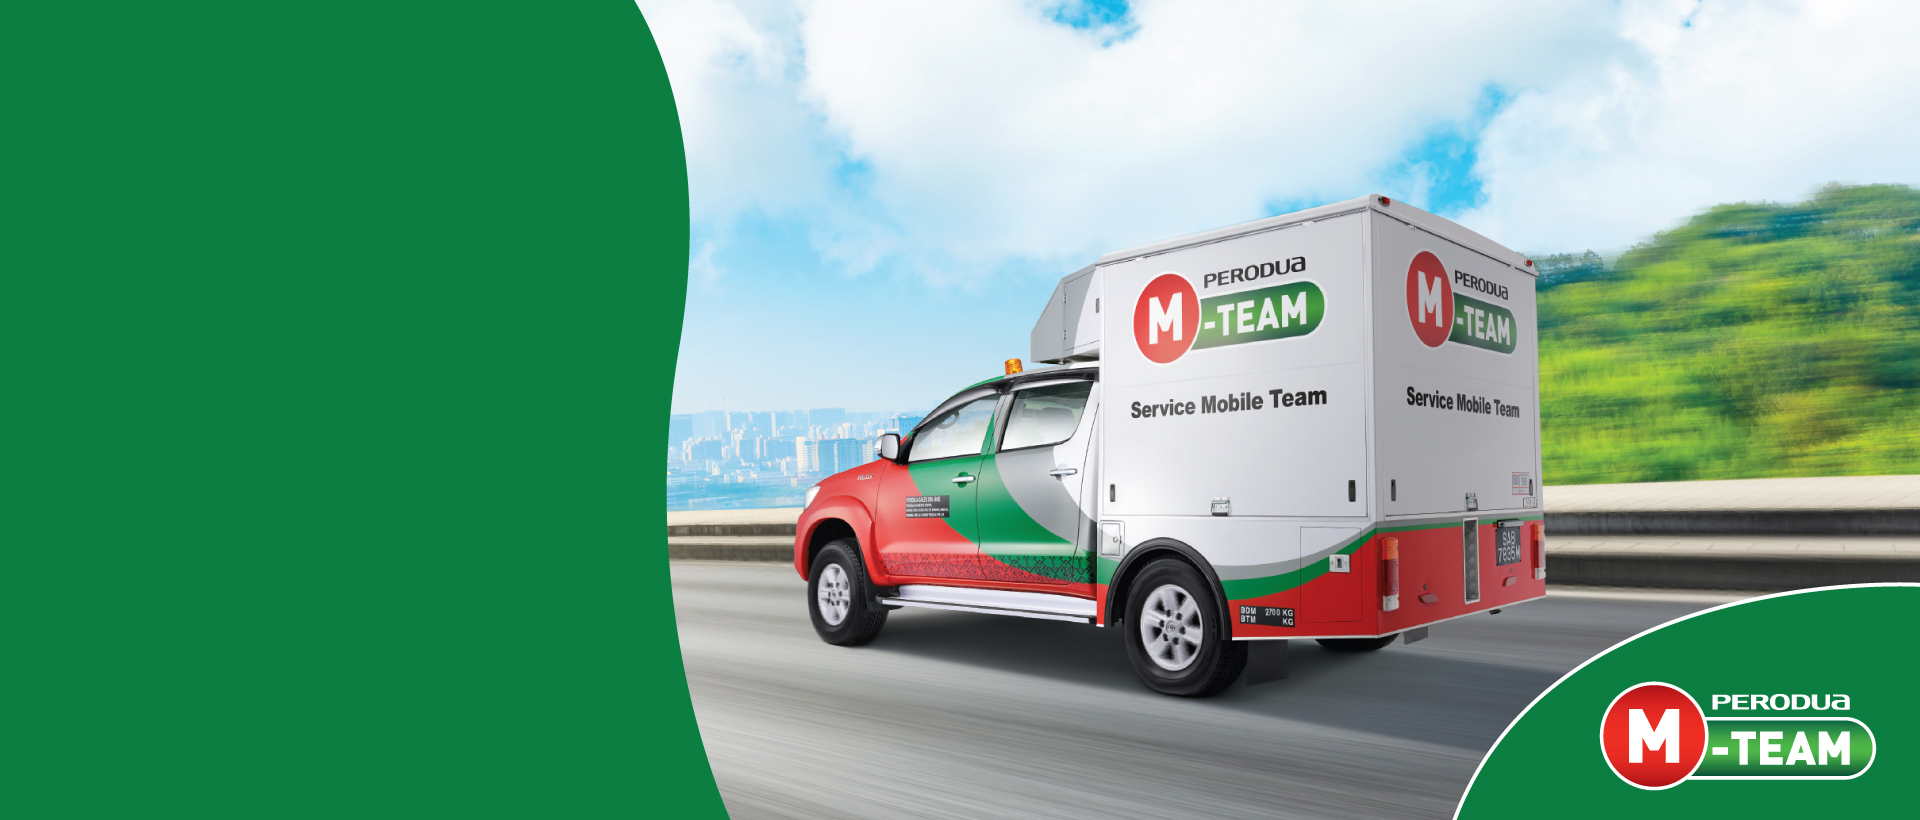 M-Team Banner | Perodua M-Team Professional Service